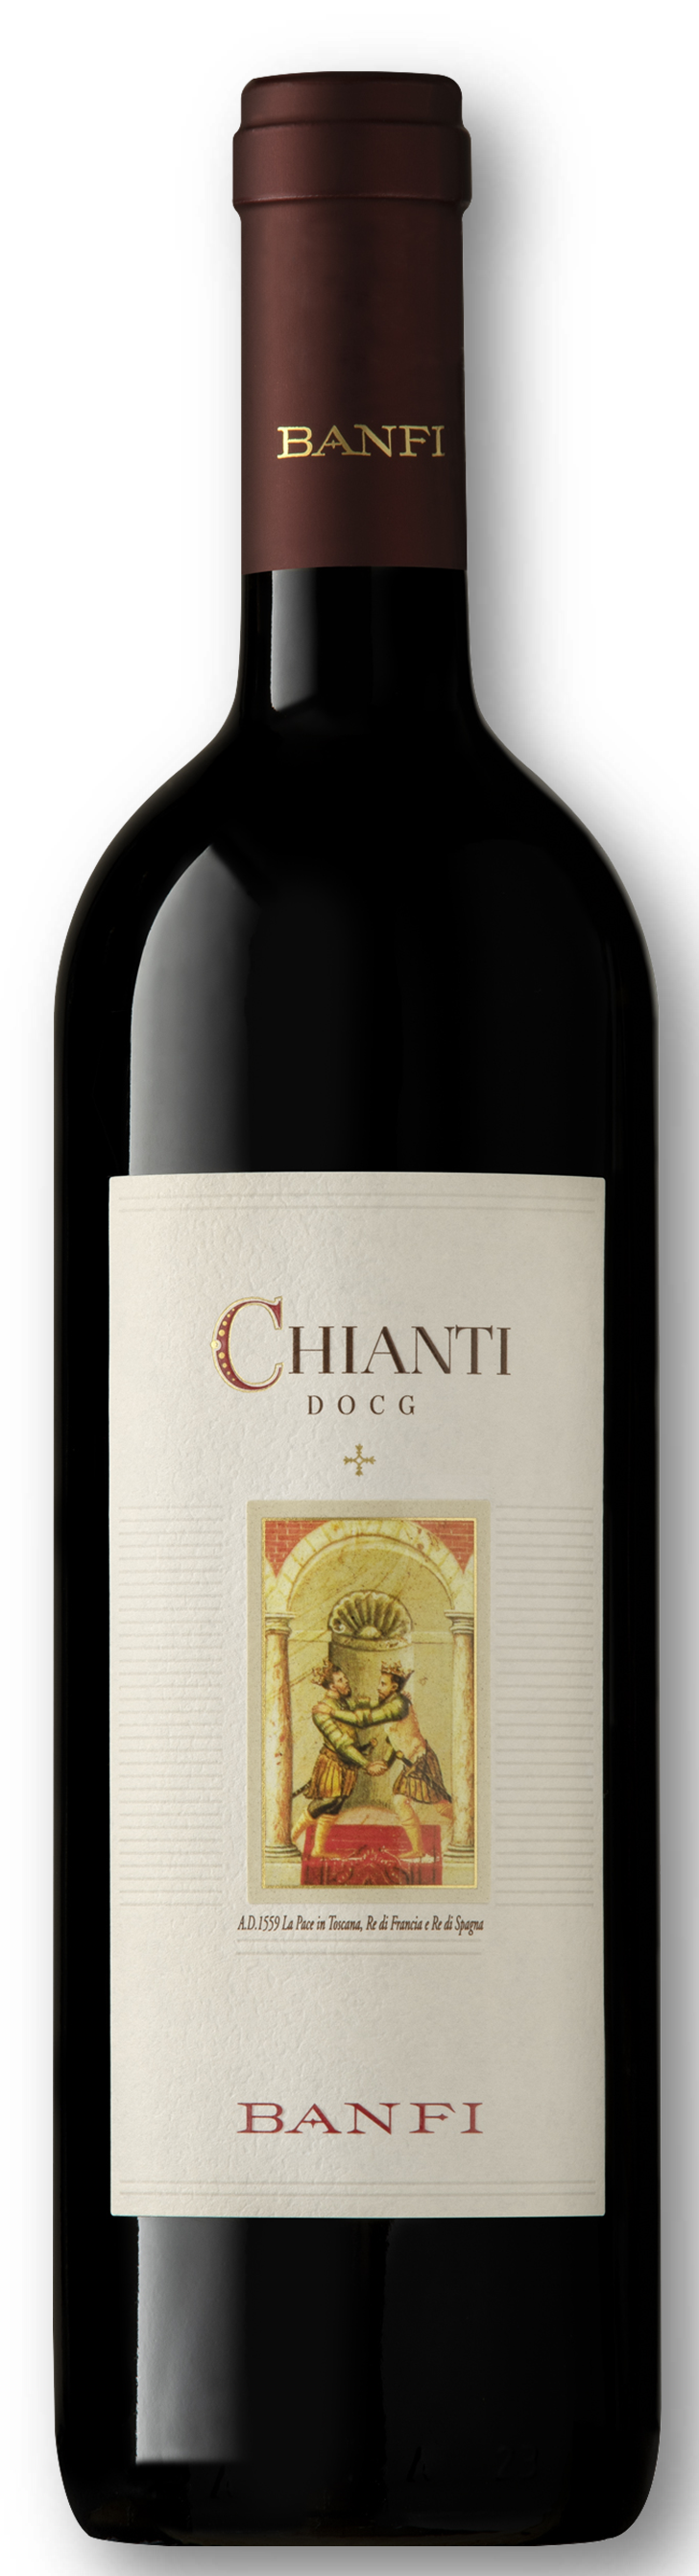 Chianti DOCG 0,75l 13% - 2021 | Banfi - Rotwein aus Toskana